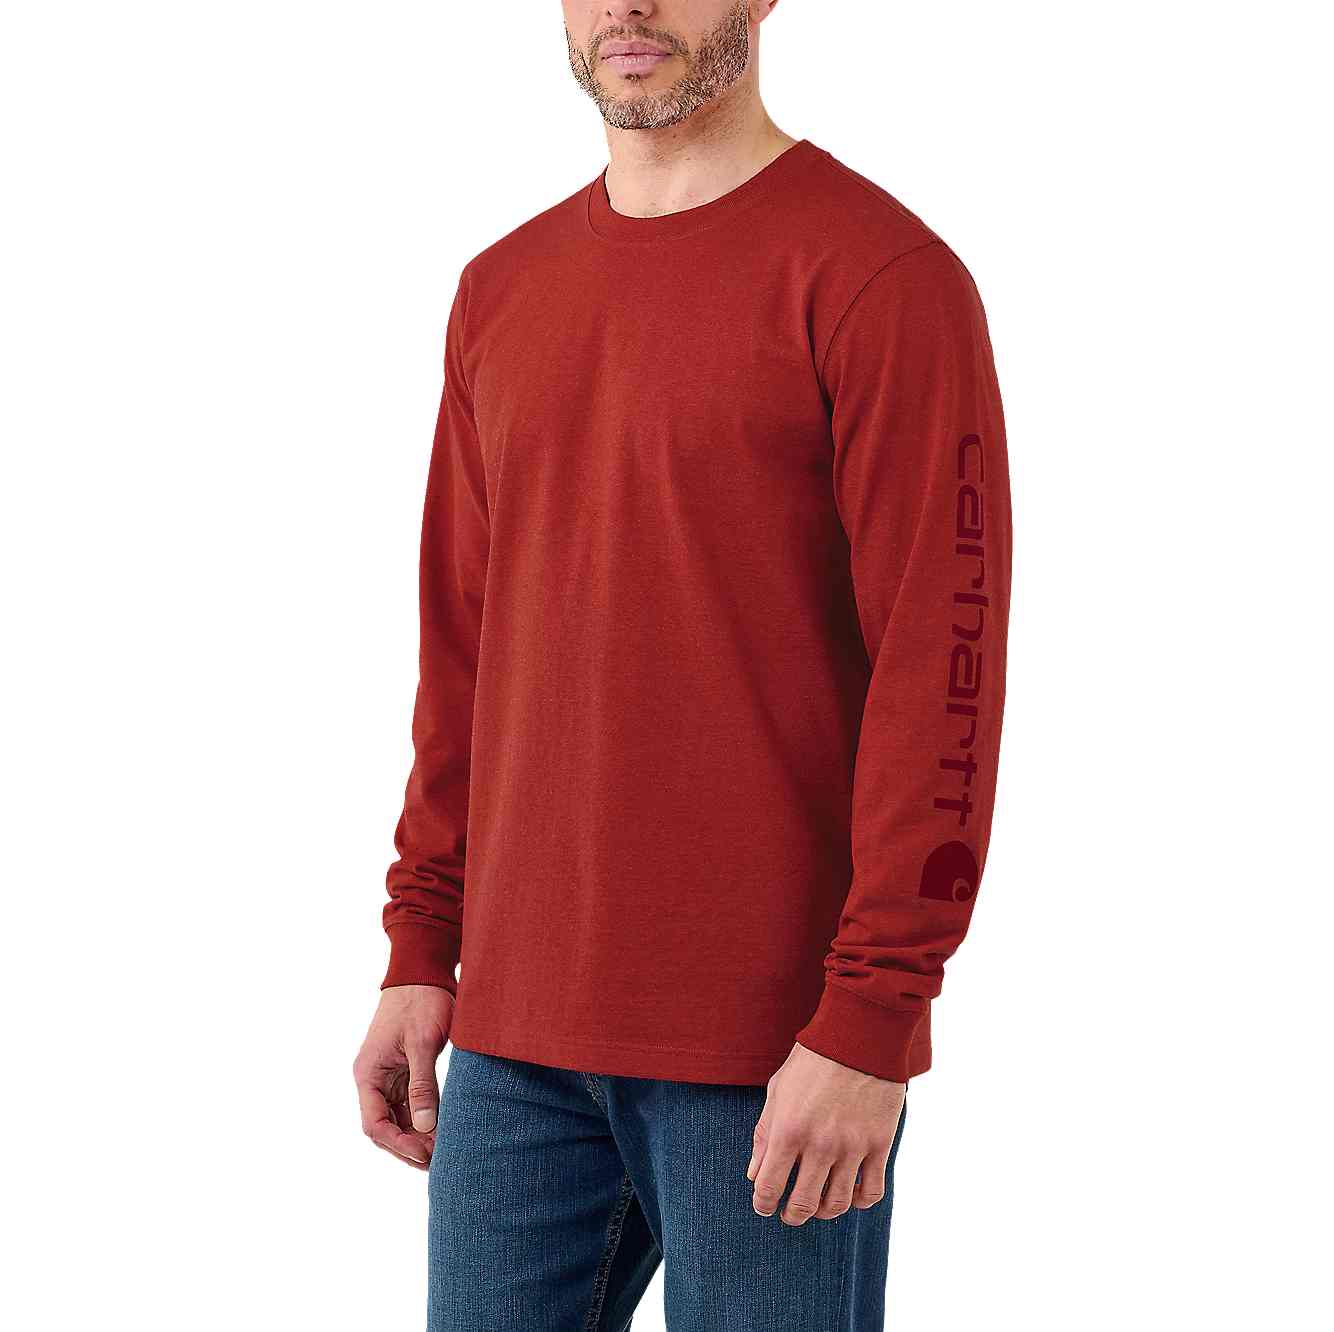 Red S discount 66% MEN FASHION Jumpers & Sweatshirts Sports Carhartt sweatshirt 